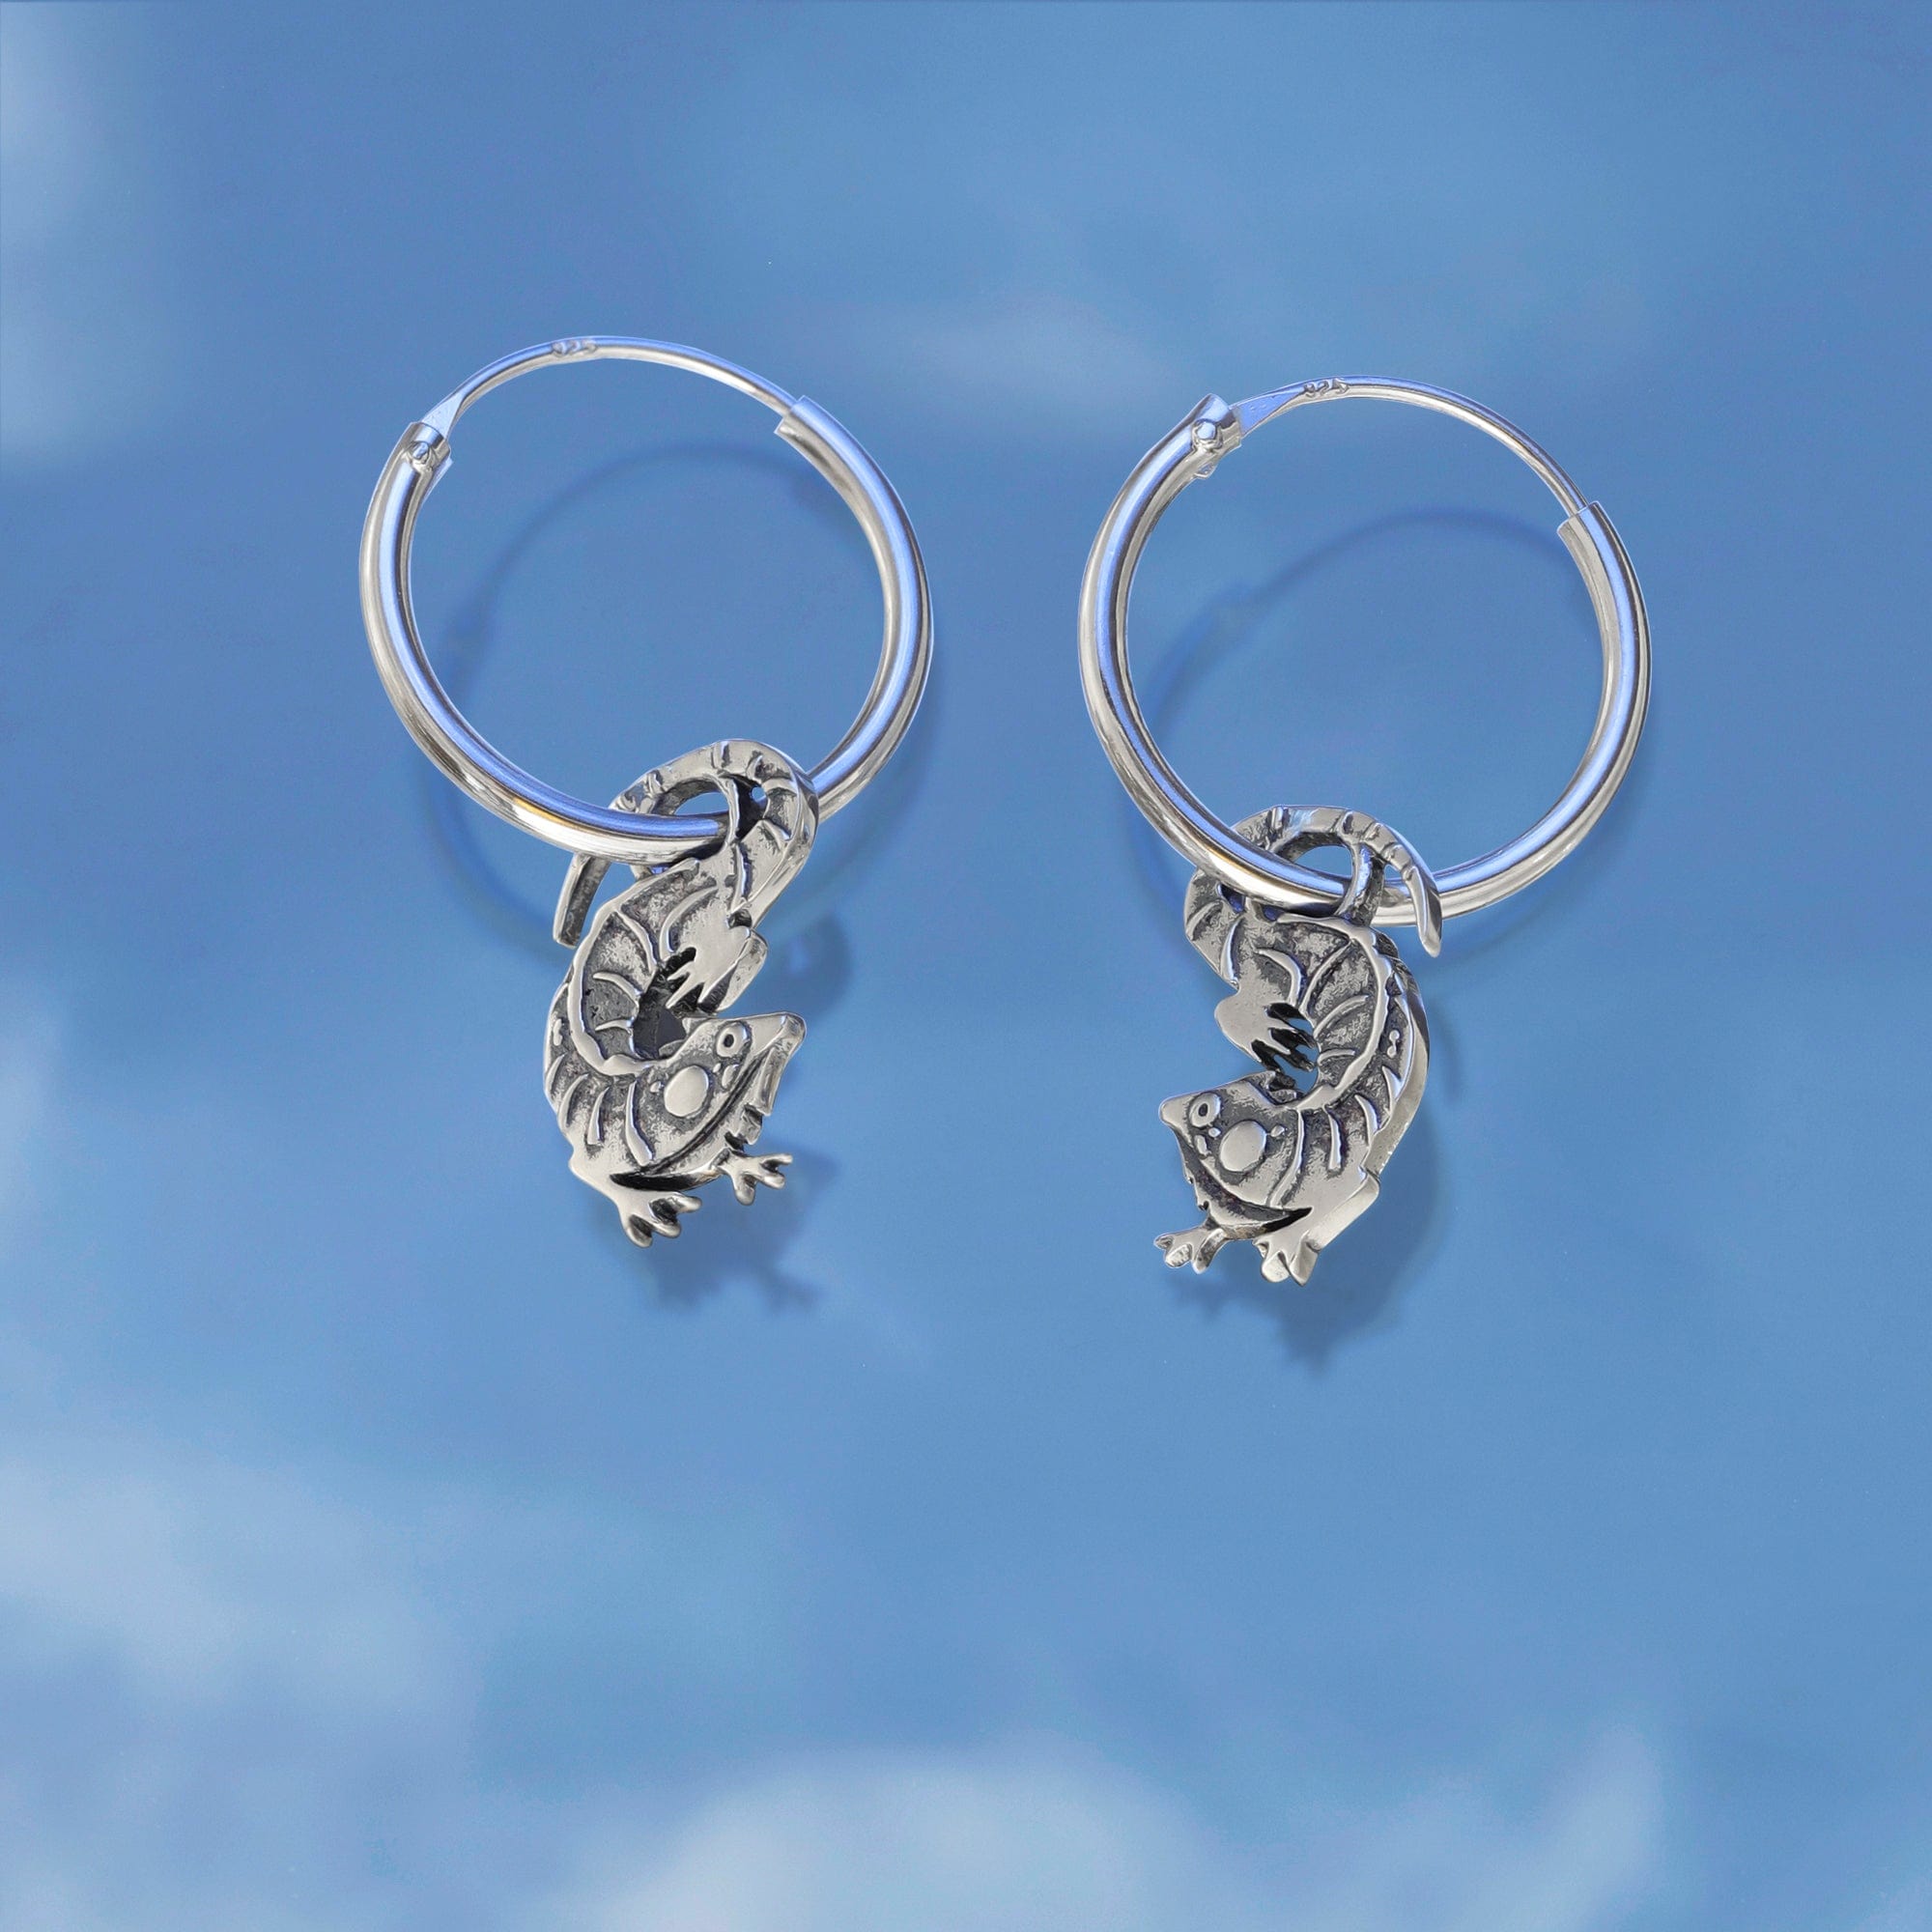 Boma Jewelry Earrings Iguana Hoops